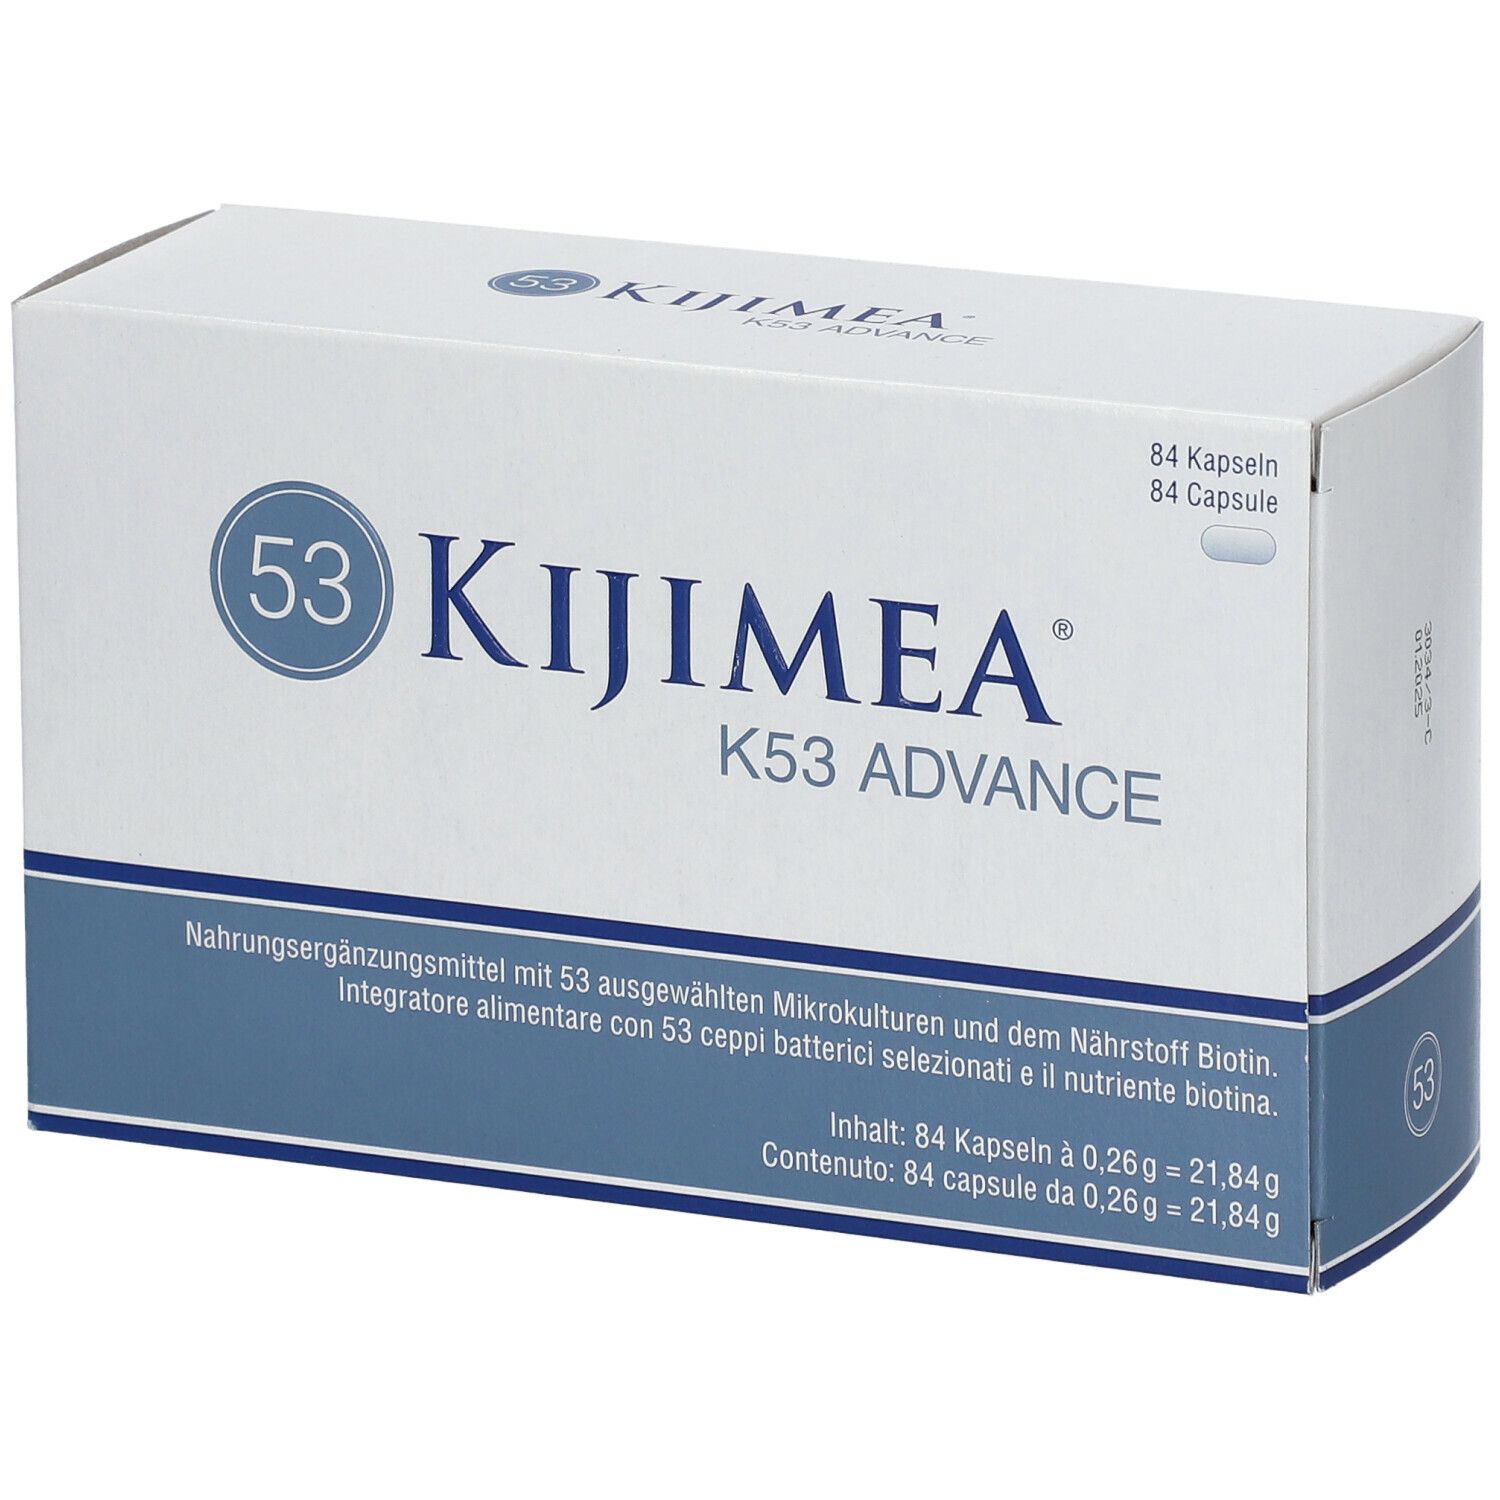 KIJIMEA® K53 ADVANCE